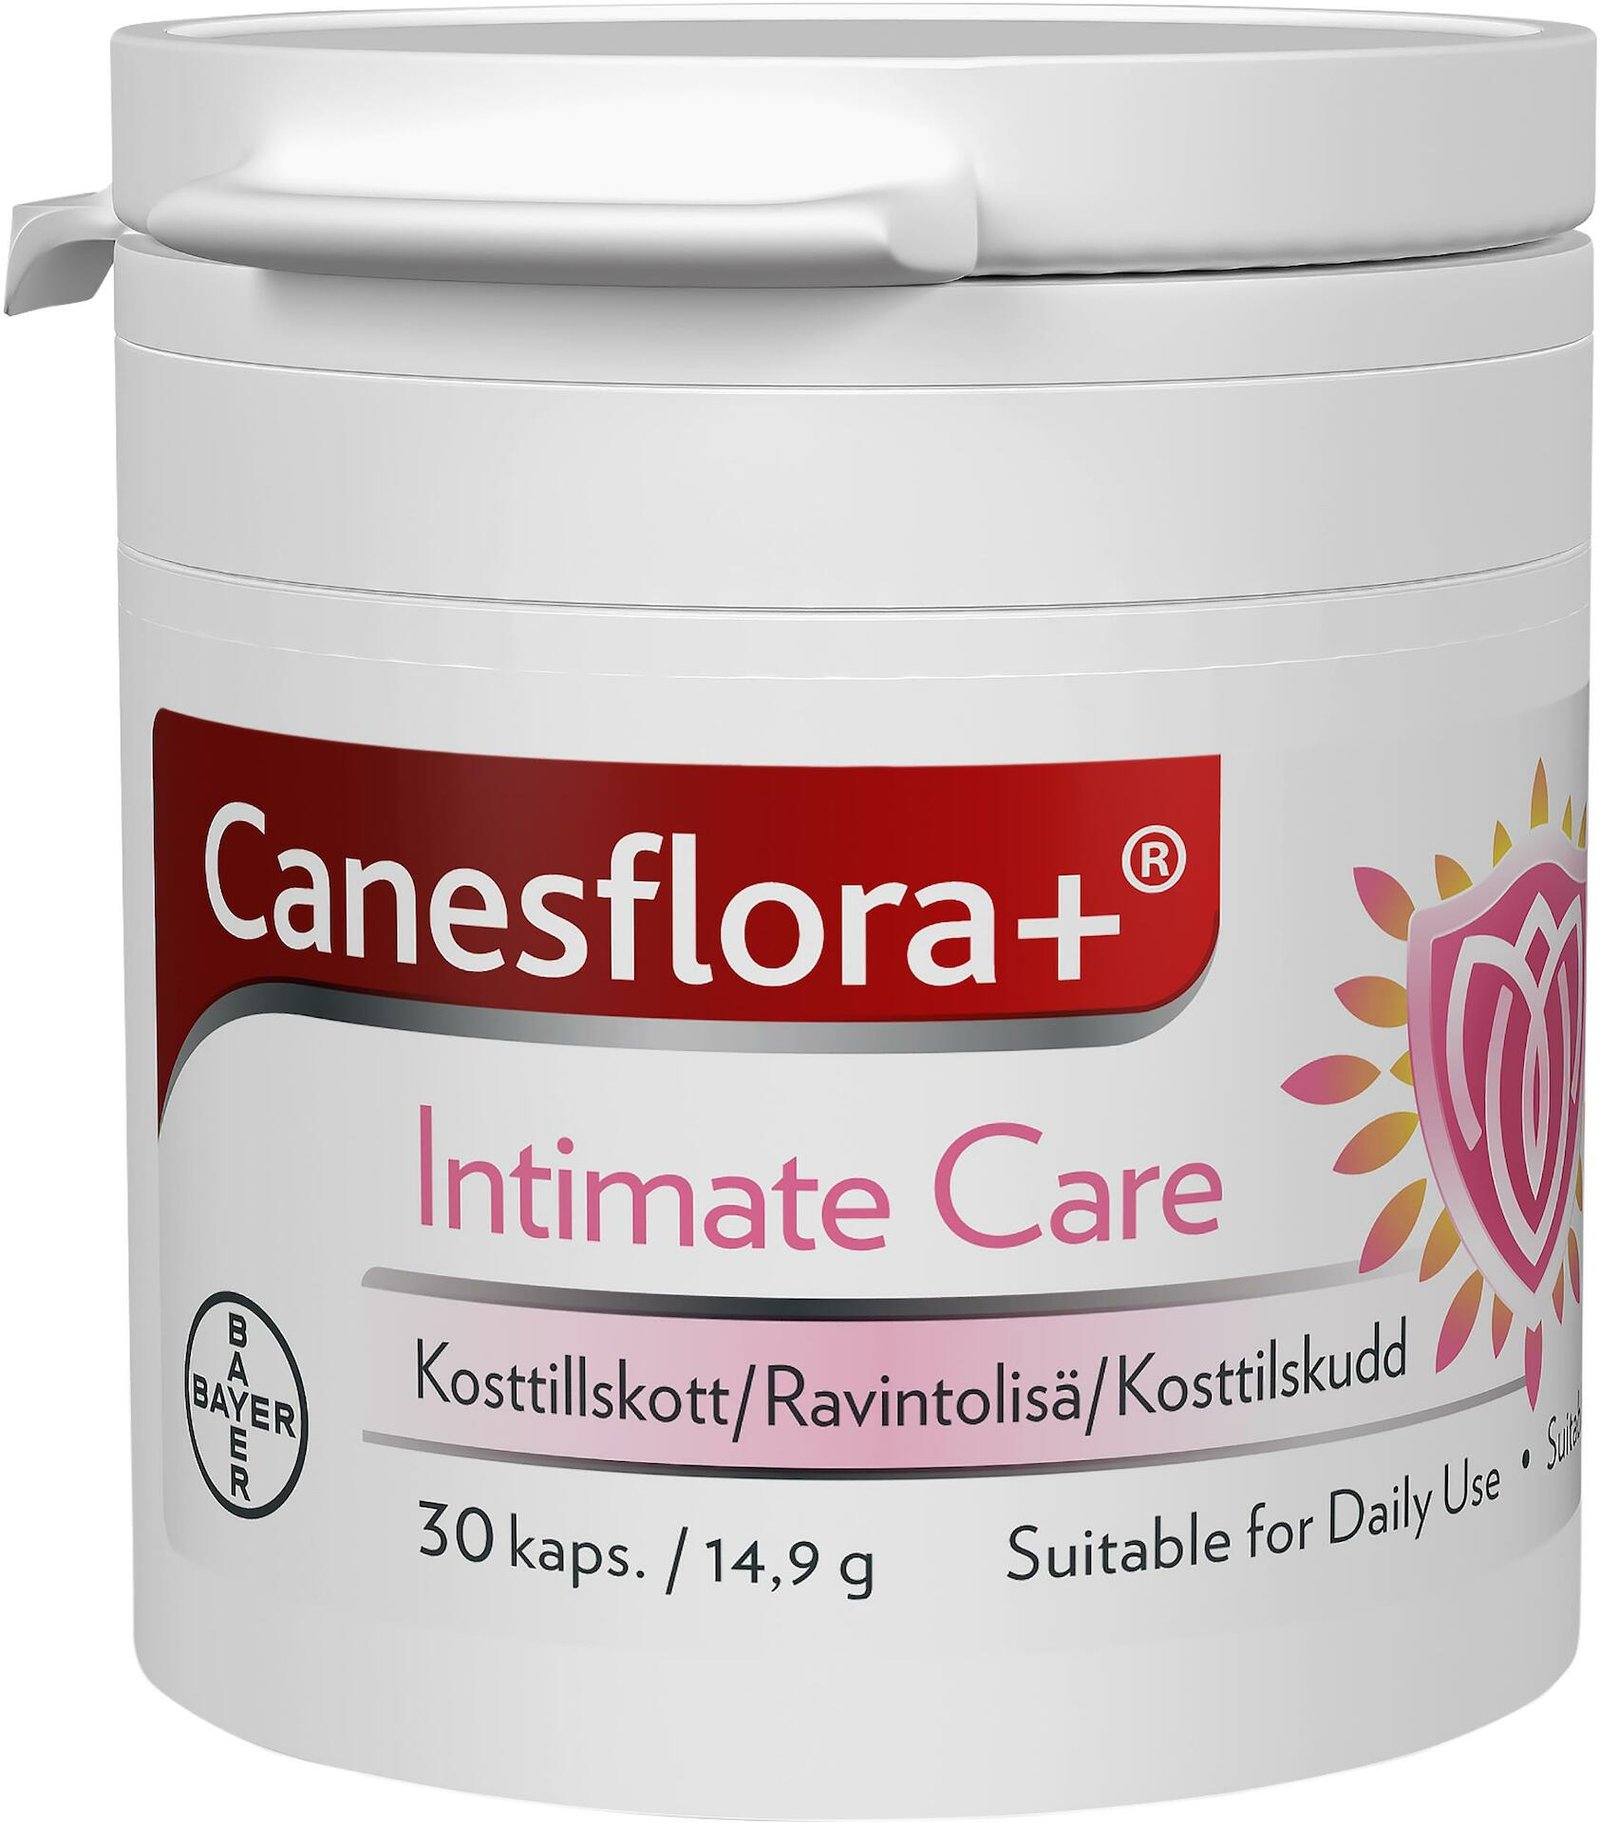 Canesflora+ Intimate Care 30 kapslar